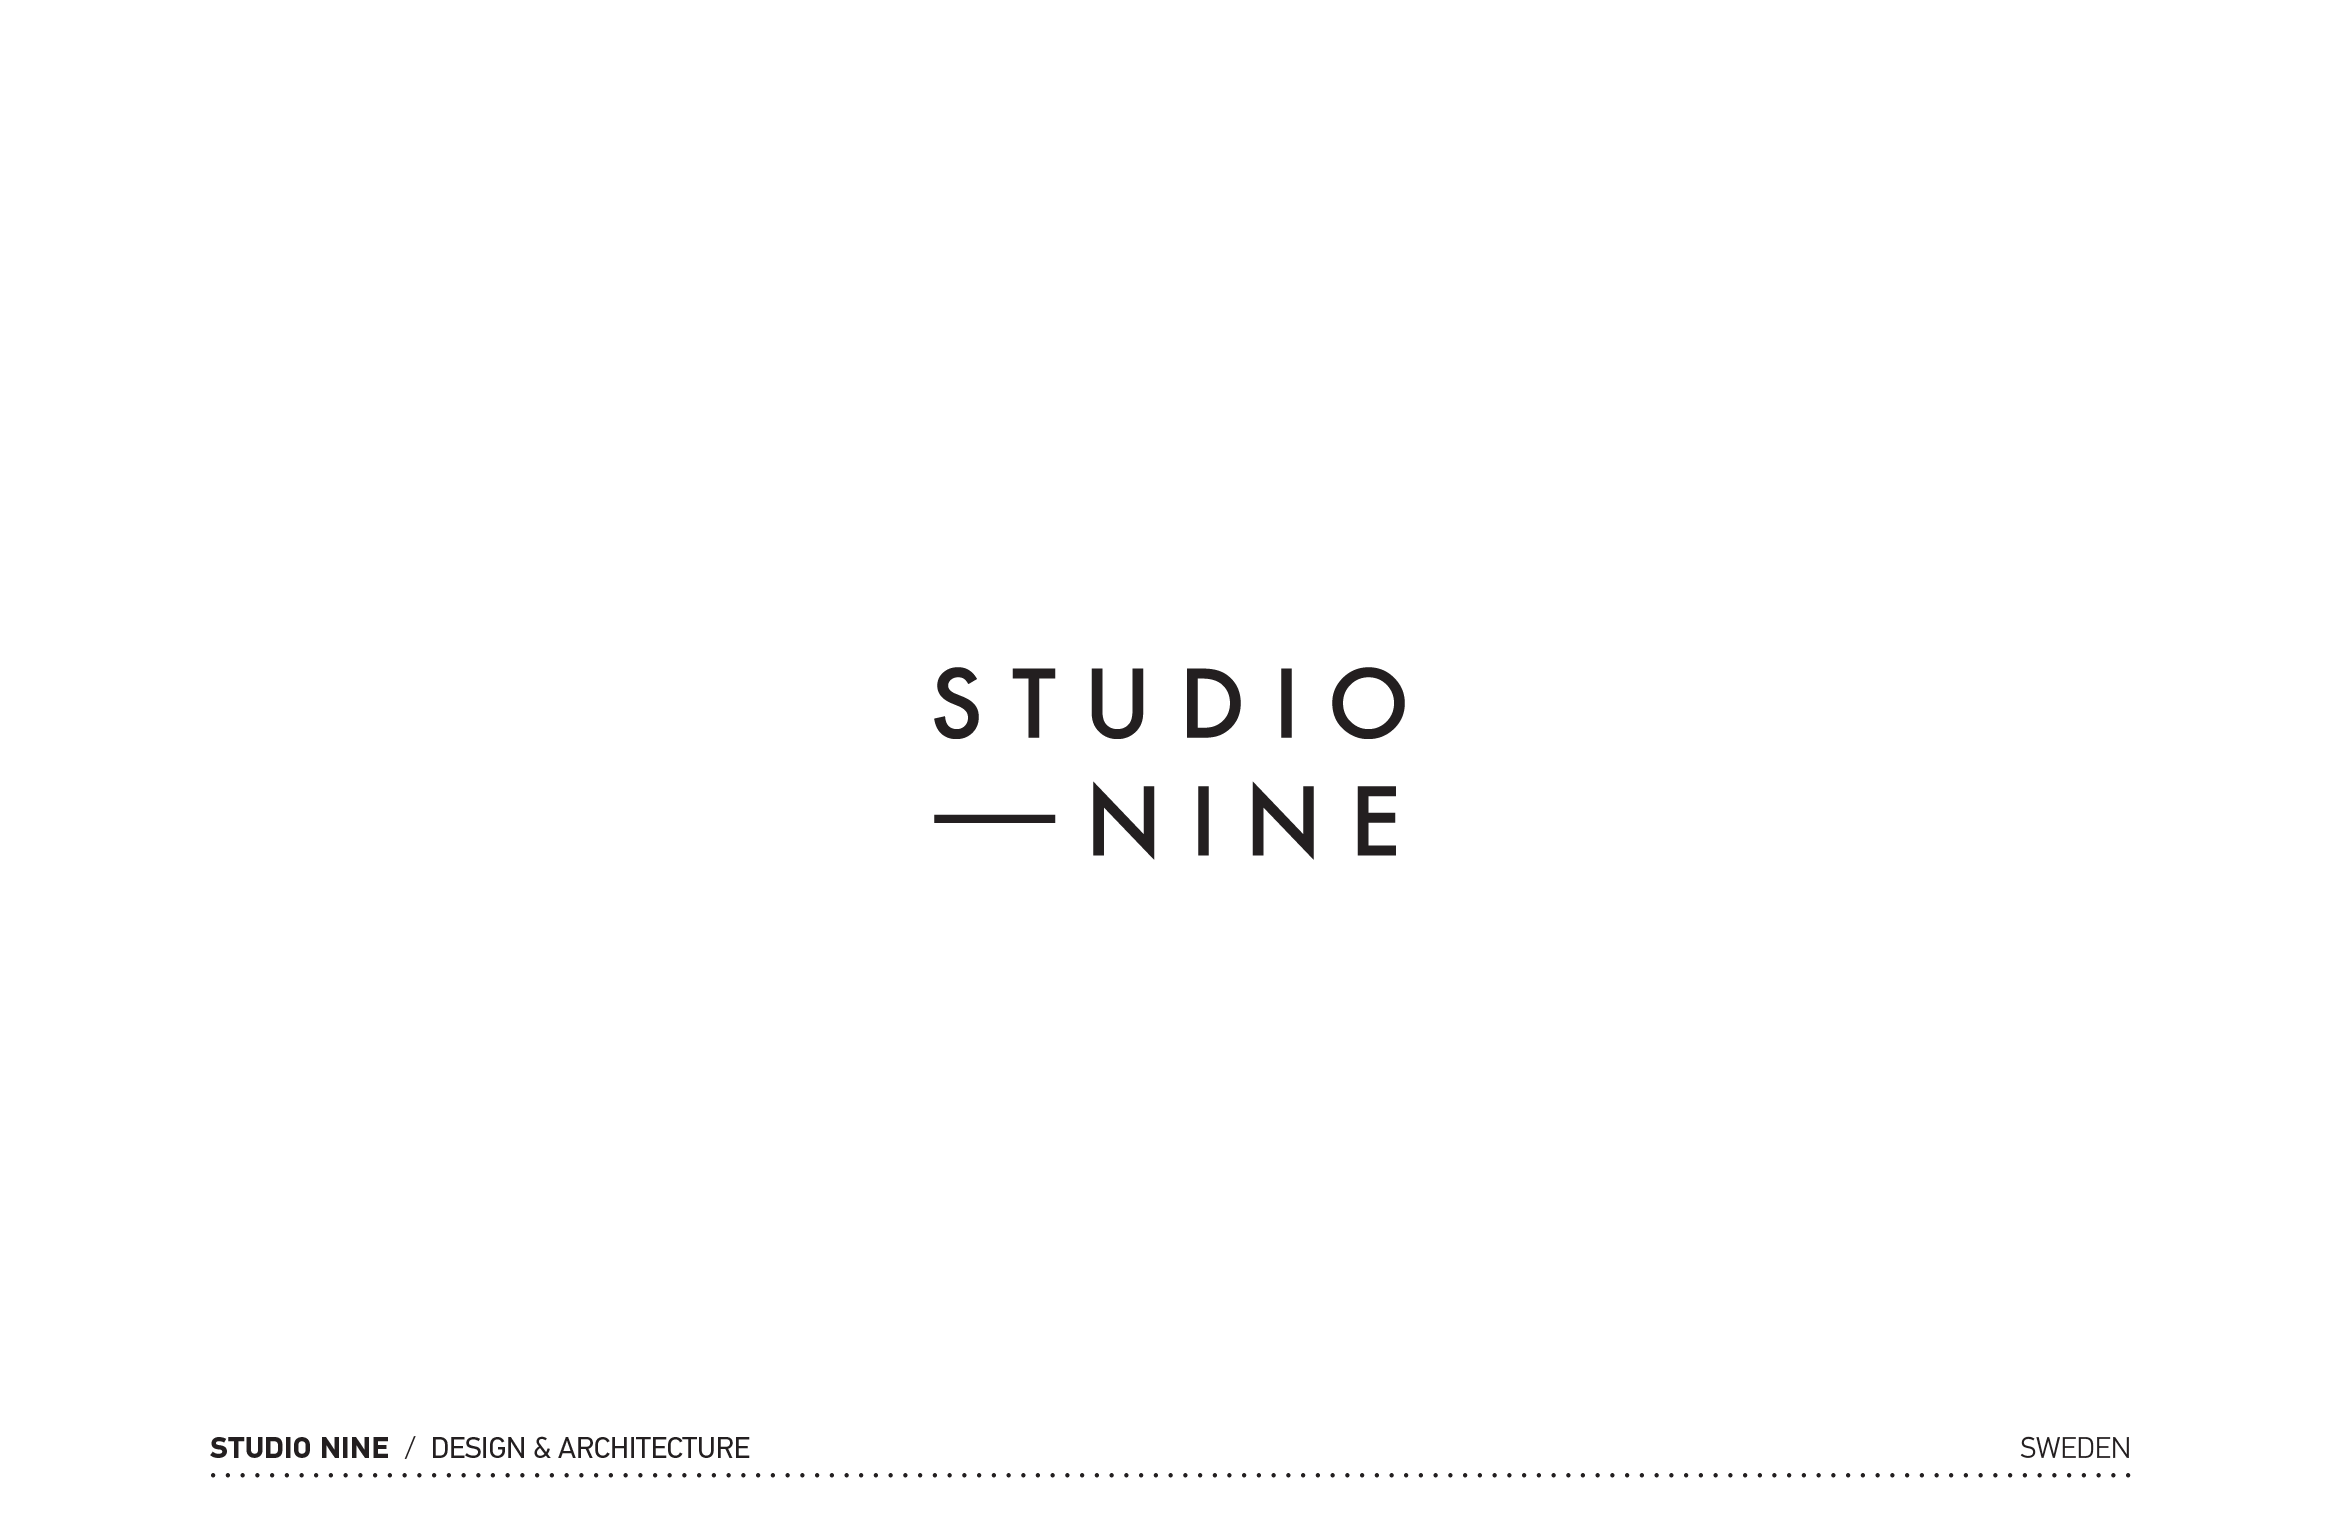 Studio Nine Logotype by Dot Creative Studio